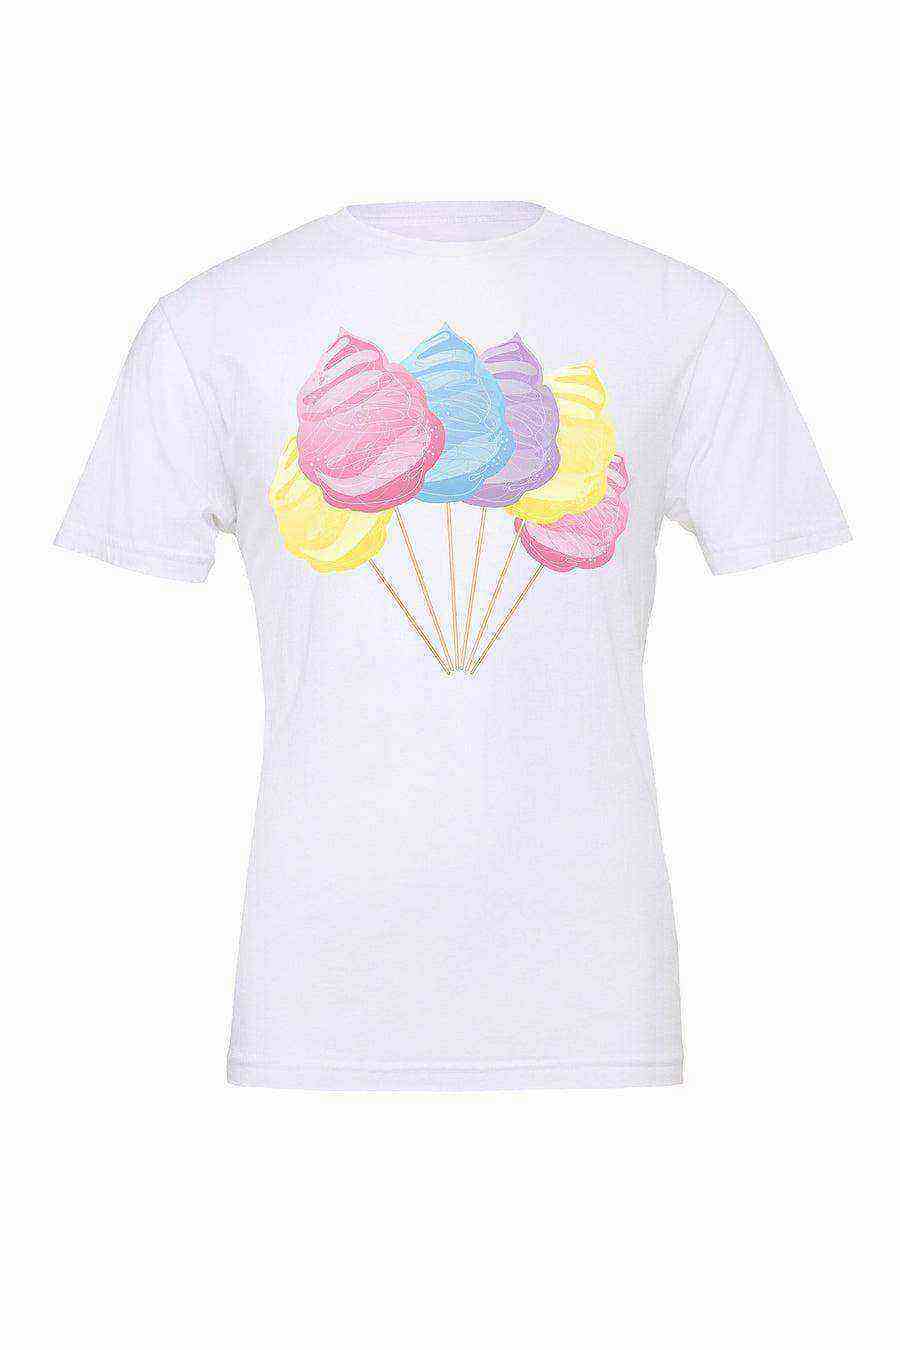 Cotton Candy Shirt | Cotton Candy | Summer Shirt - Dylan's Tees